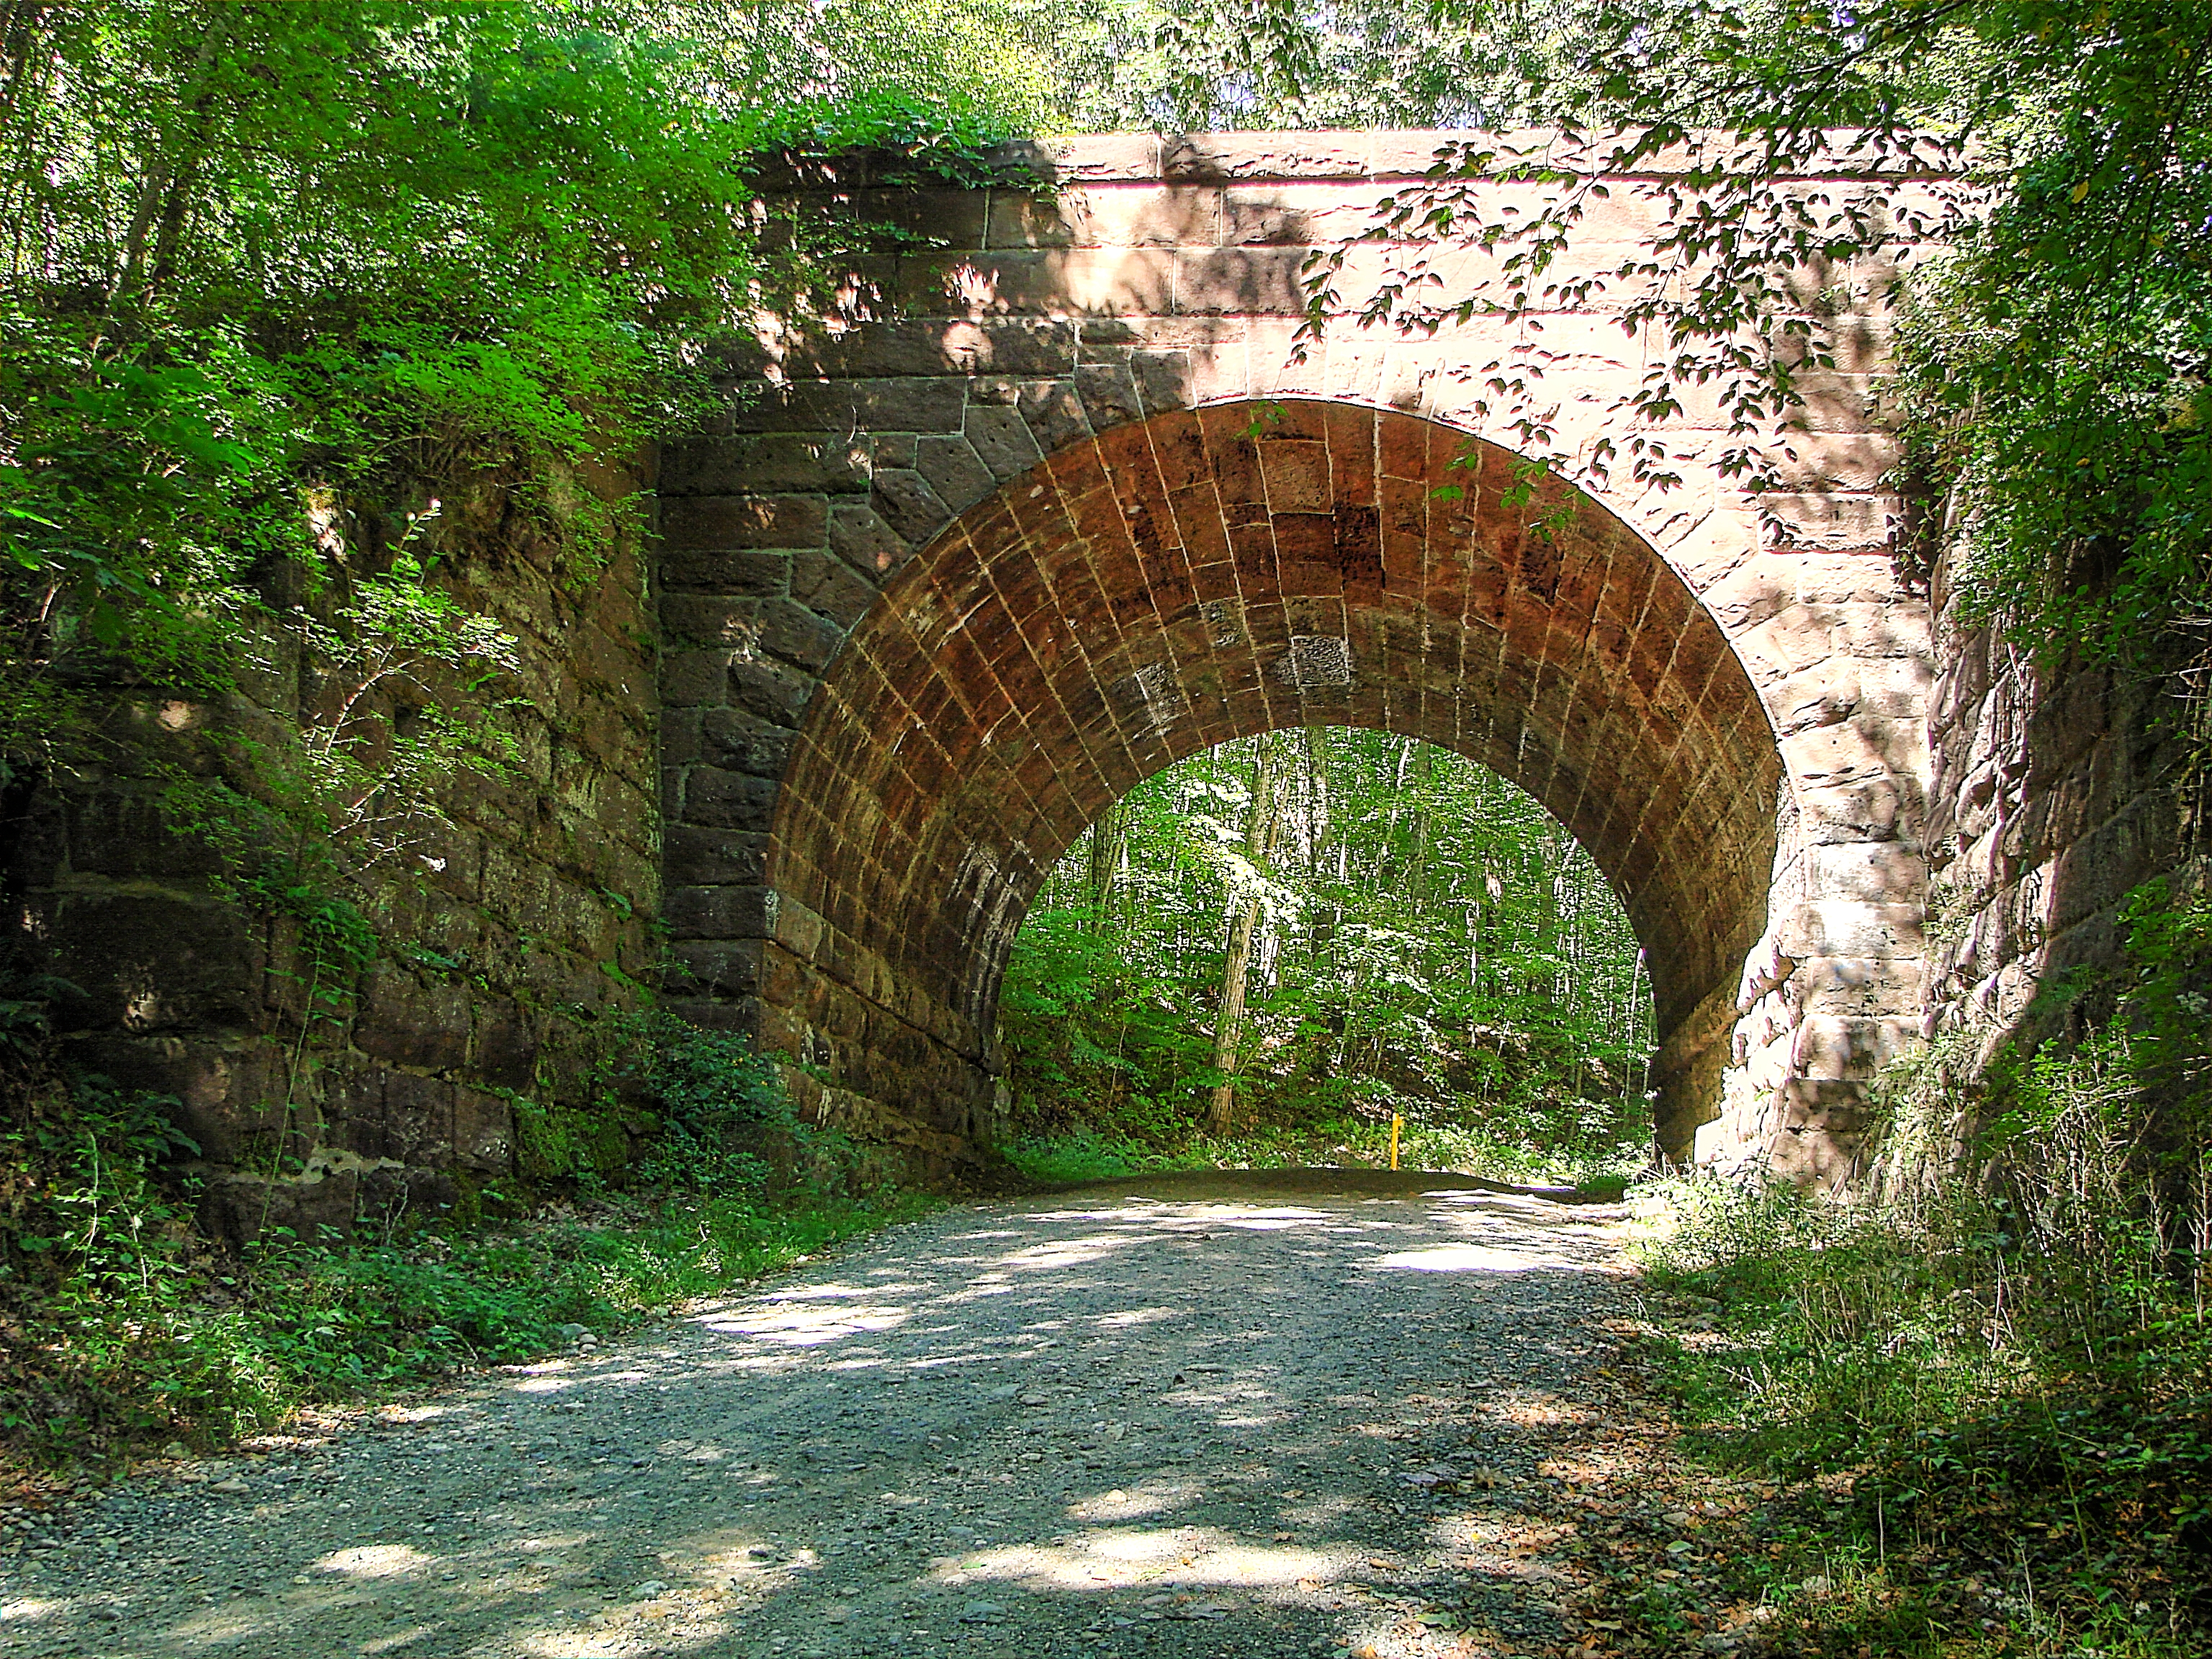 File:River Road Stone RR Bridge 003.jpg - Wikimedia Commons